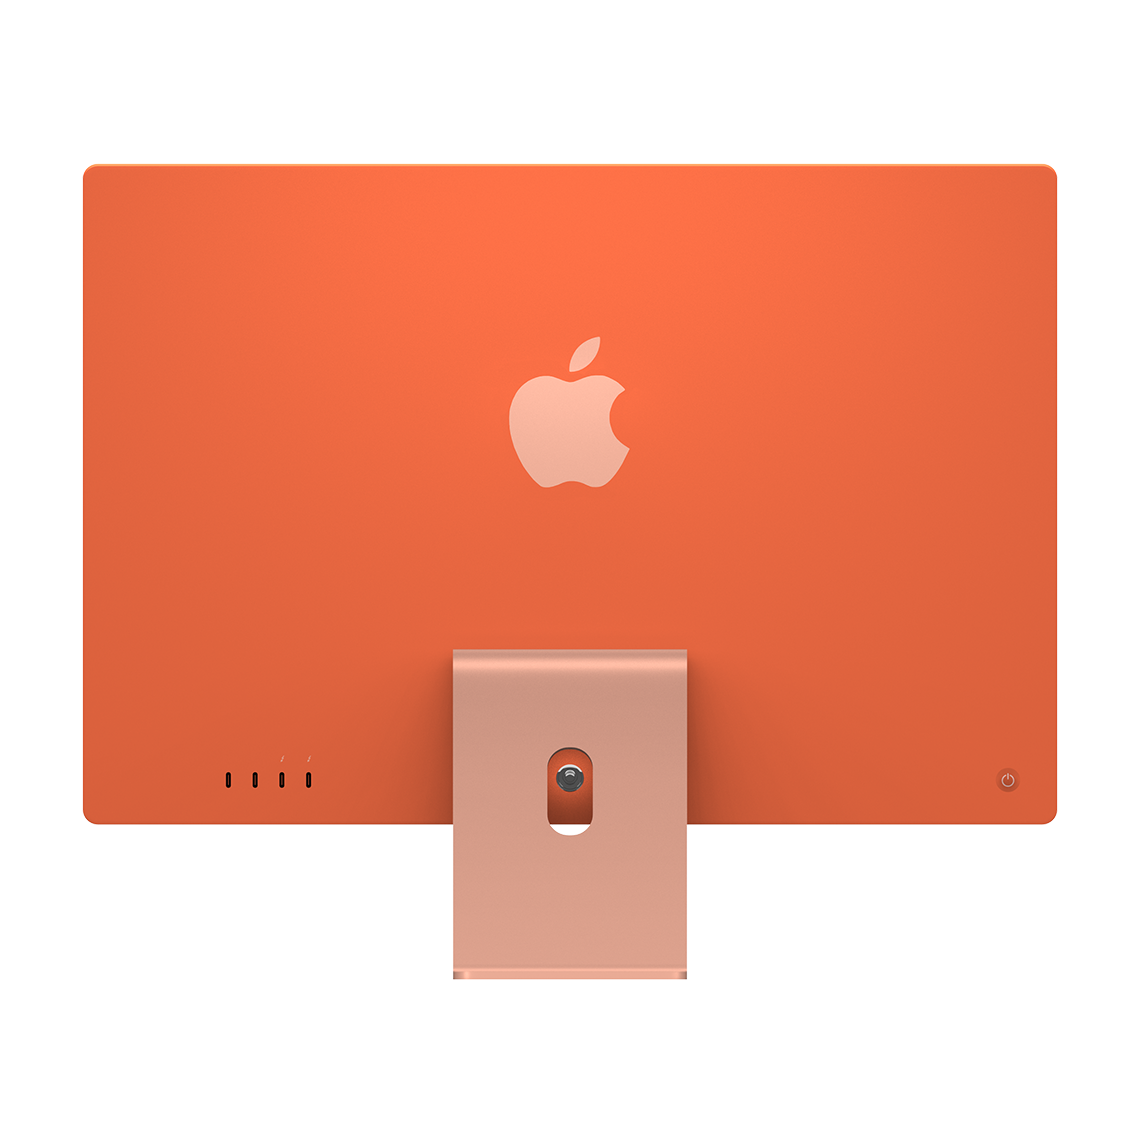 Apple M1 iMac 24-inch - Orange - 8GB RAM, 512GB Flash, 8-Core GPU, 4 Ports, Open Box